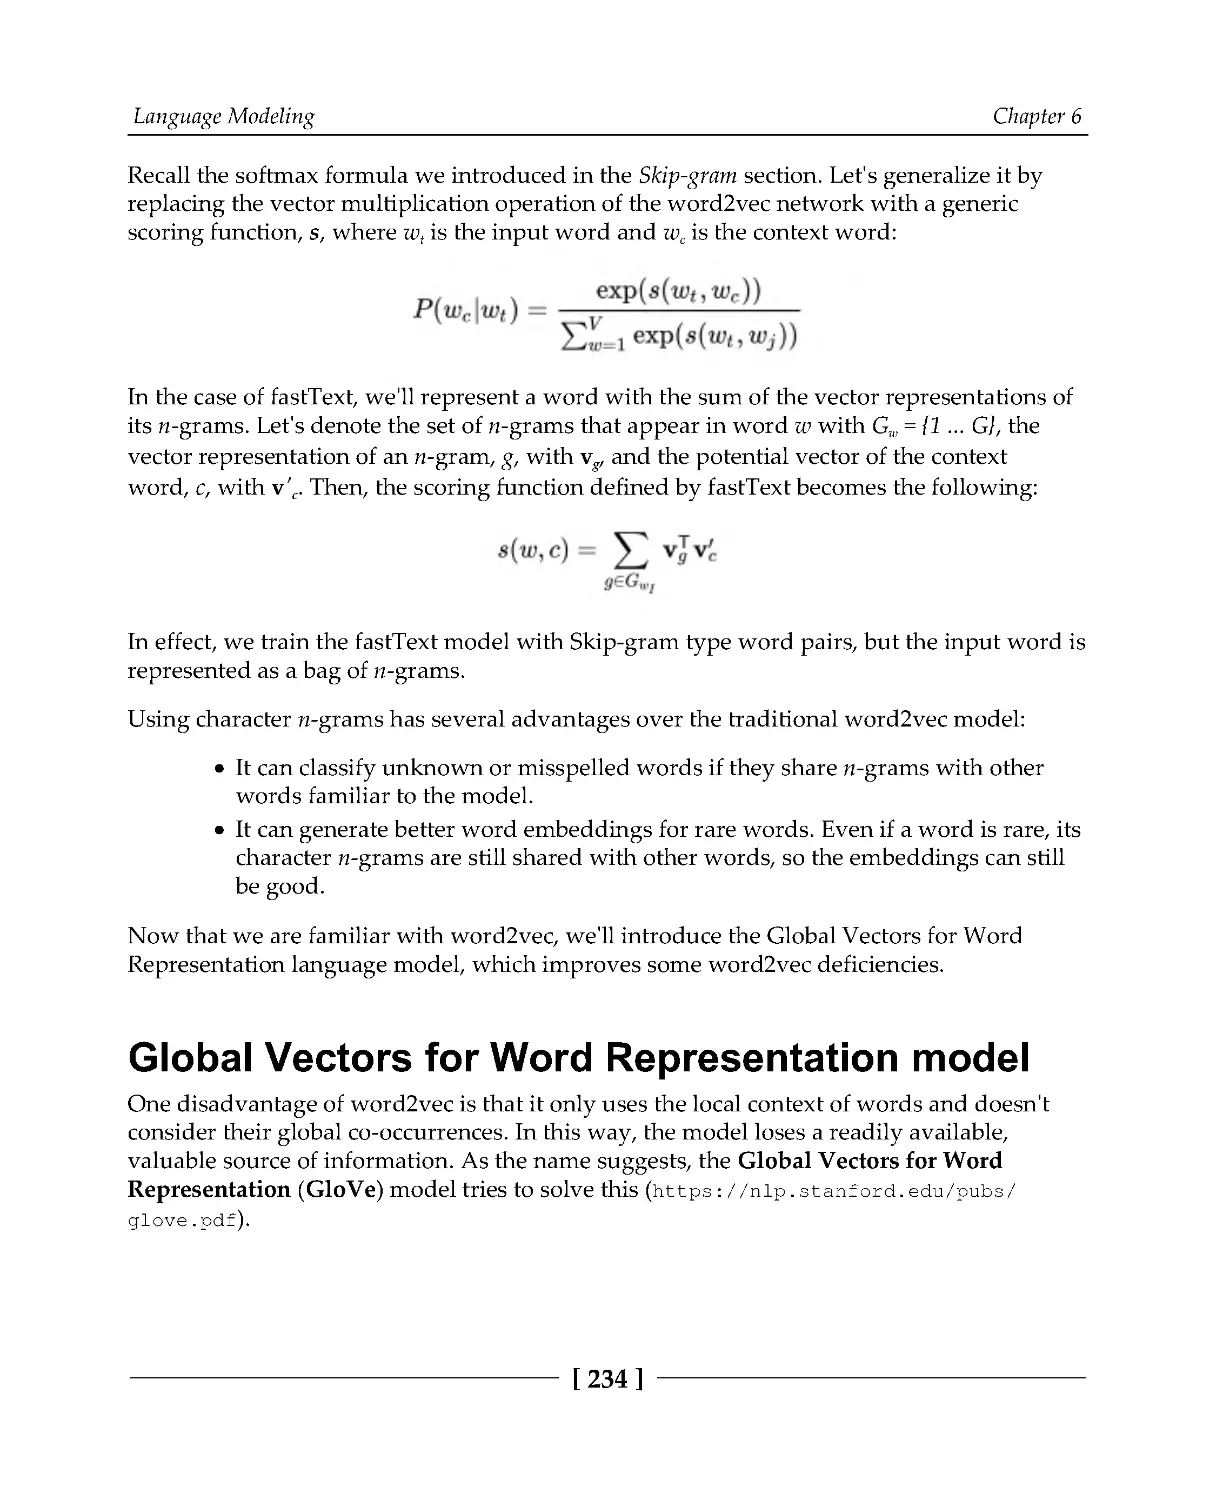 Global Vectors for Word Representation model